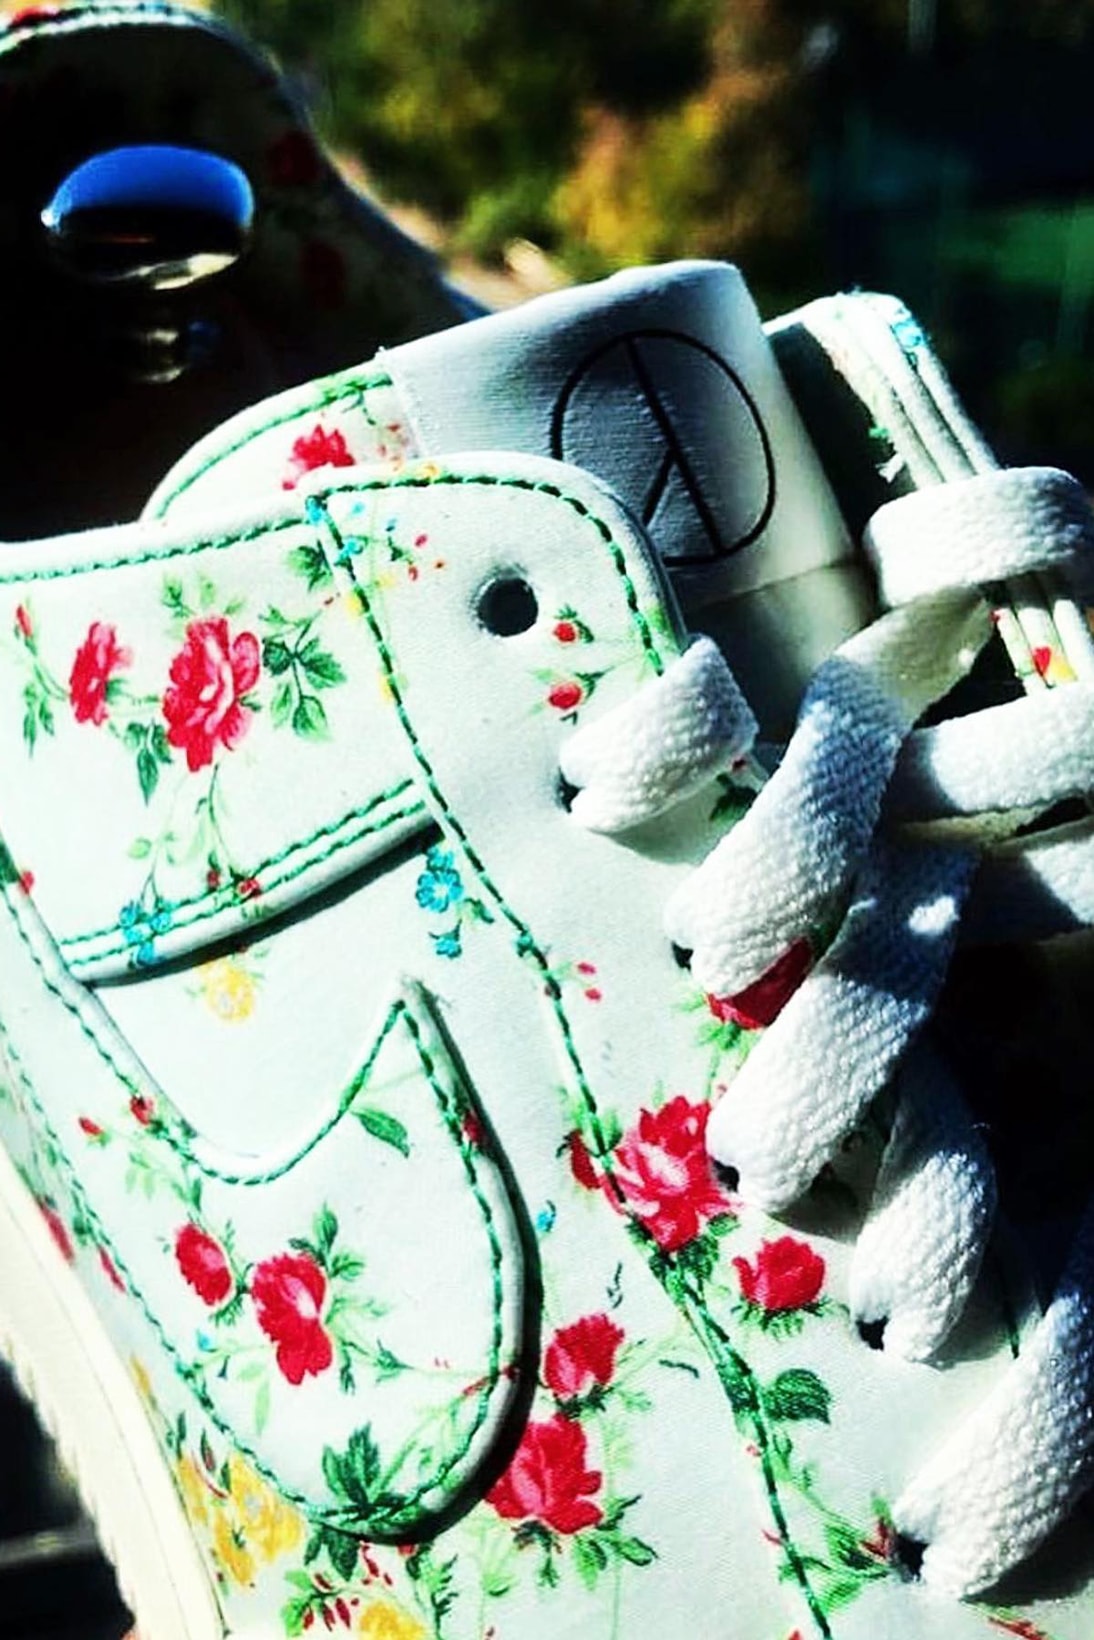 G-Dragon PEACEMINUSONE Nike Air Force 1 Floral Sneakers Collaboration Footwear Kicks Shoes